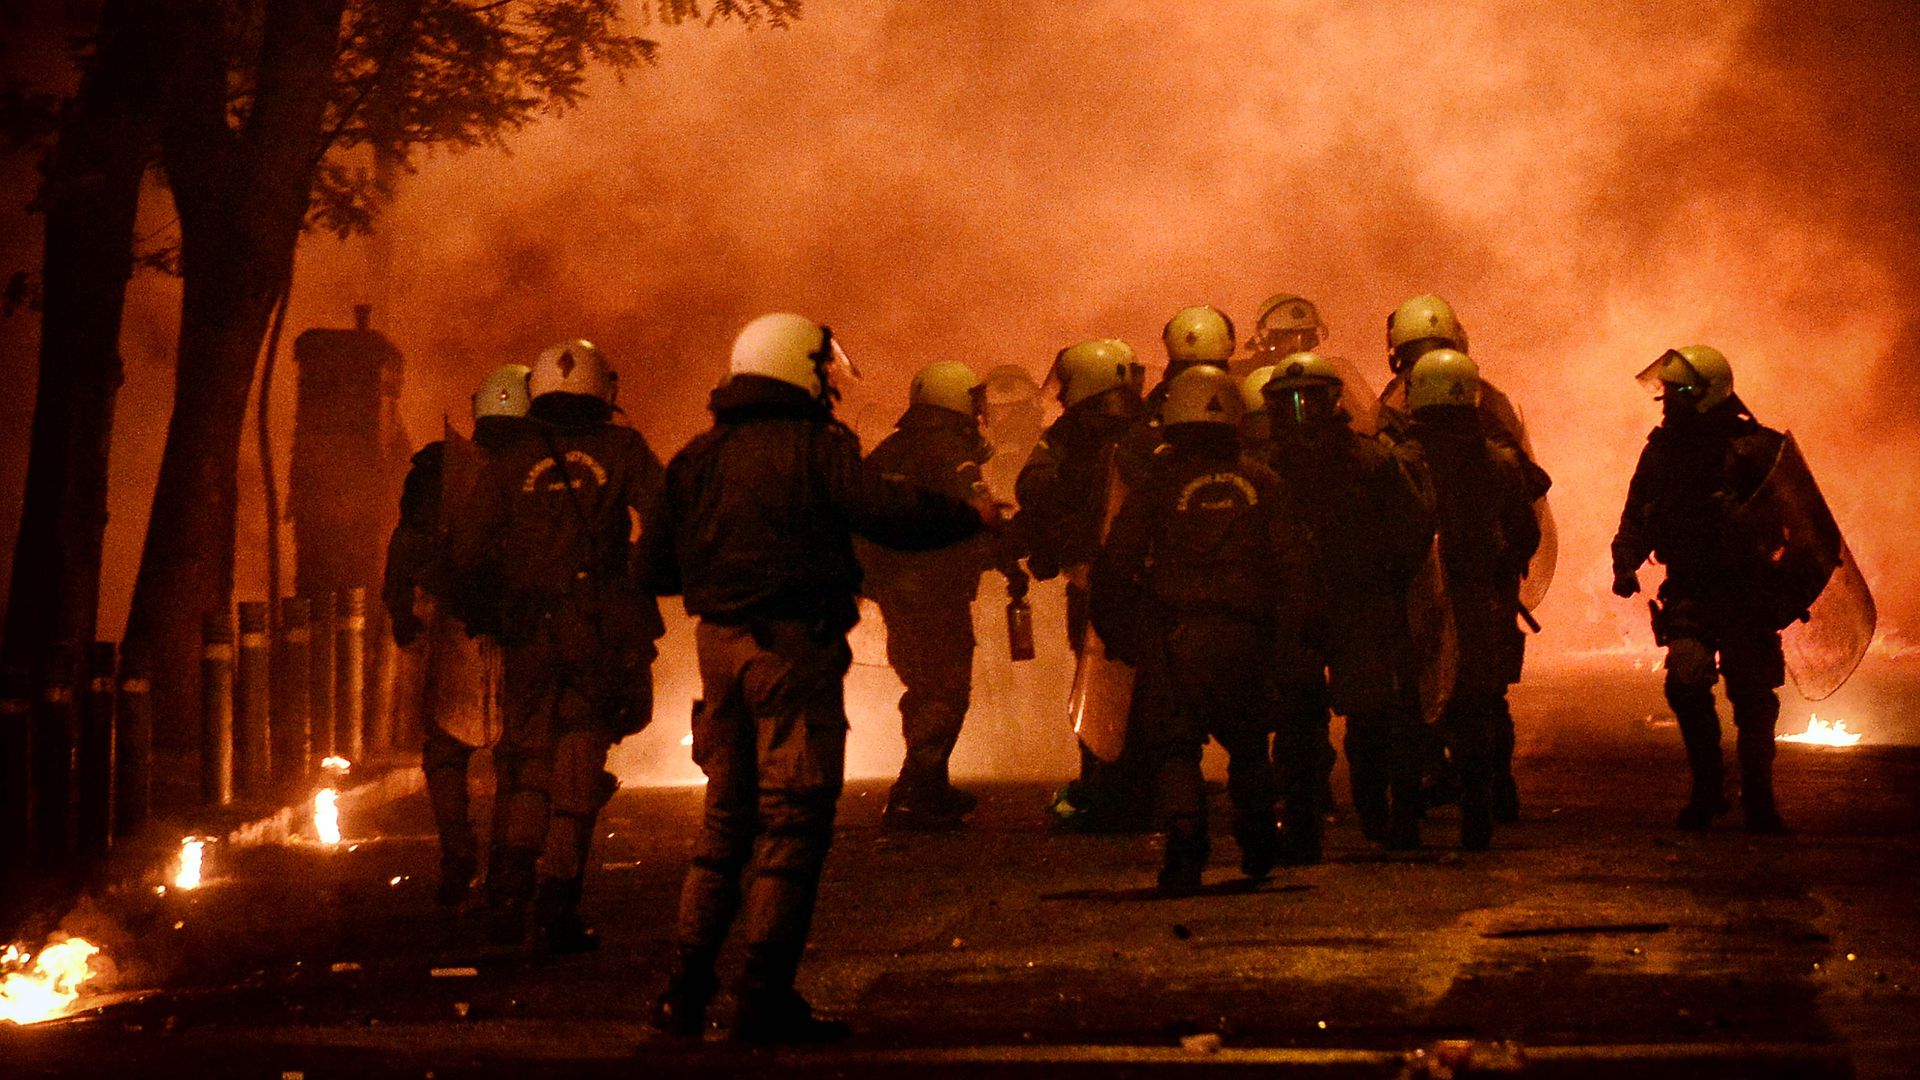 Kαταδρομική επίθεση στο Διοικητικό Πρωτοδικείο Αθηνών αργά την νύχτα – Μολότοφ σε διμοιρία των ΜΑΤ